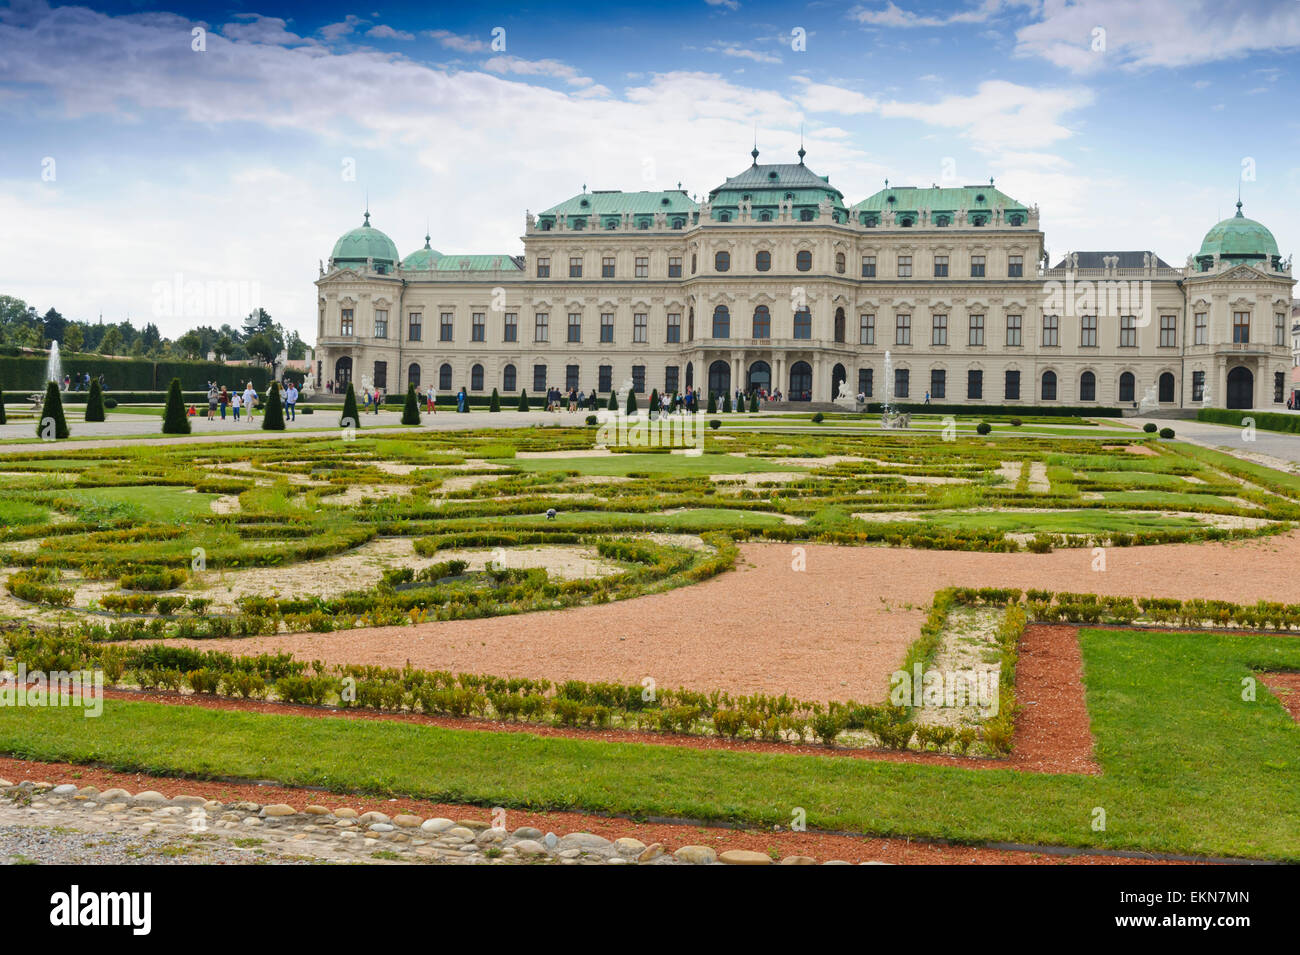 The Belvedere Palace with its vast landscape garden, Vienna, Austria. Stock Photo